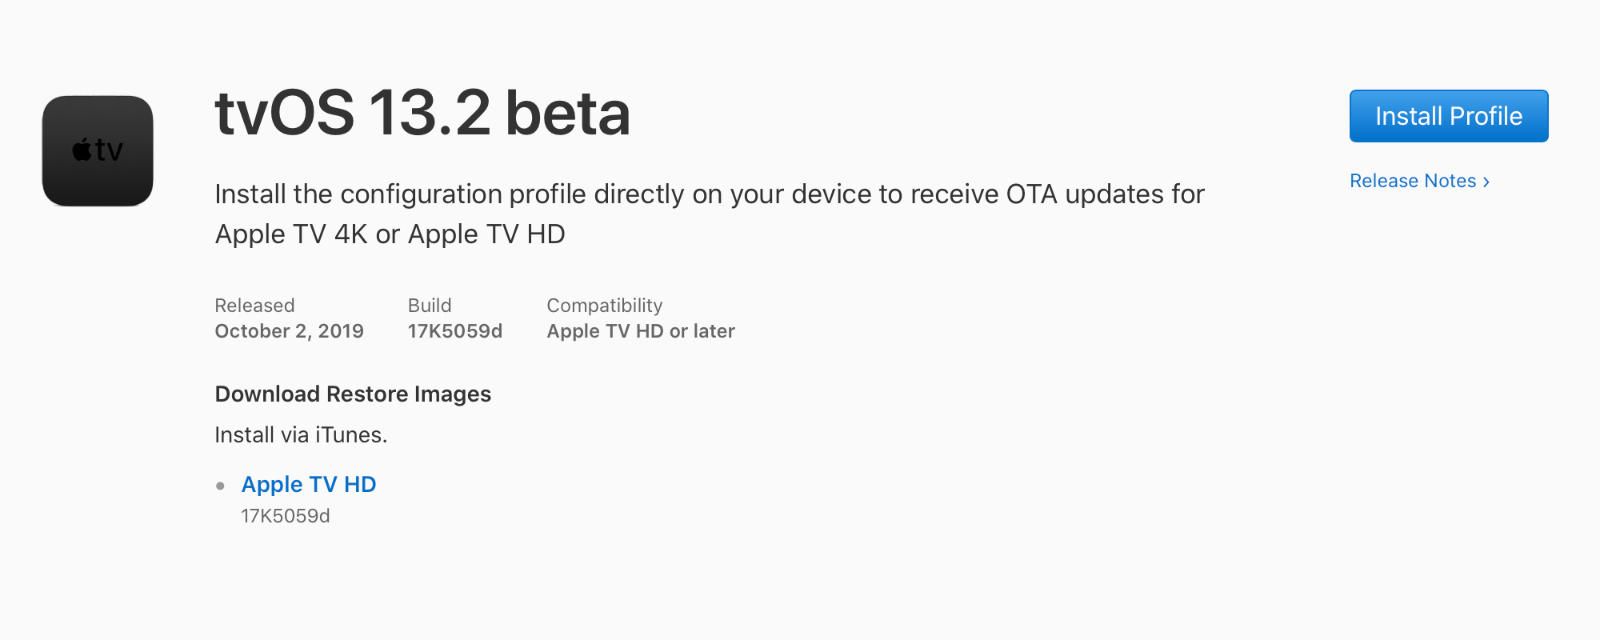 tvOS 13.2 beta